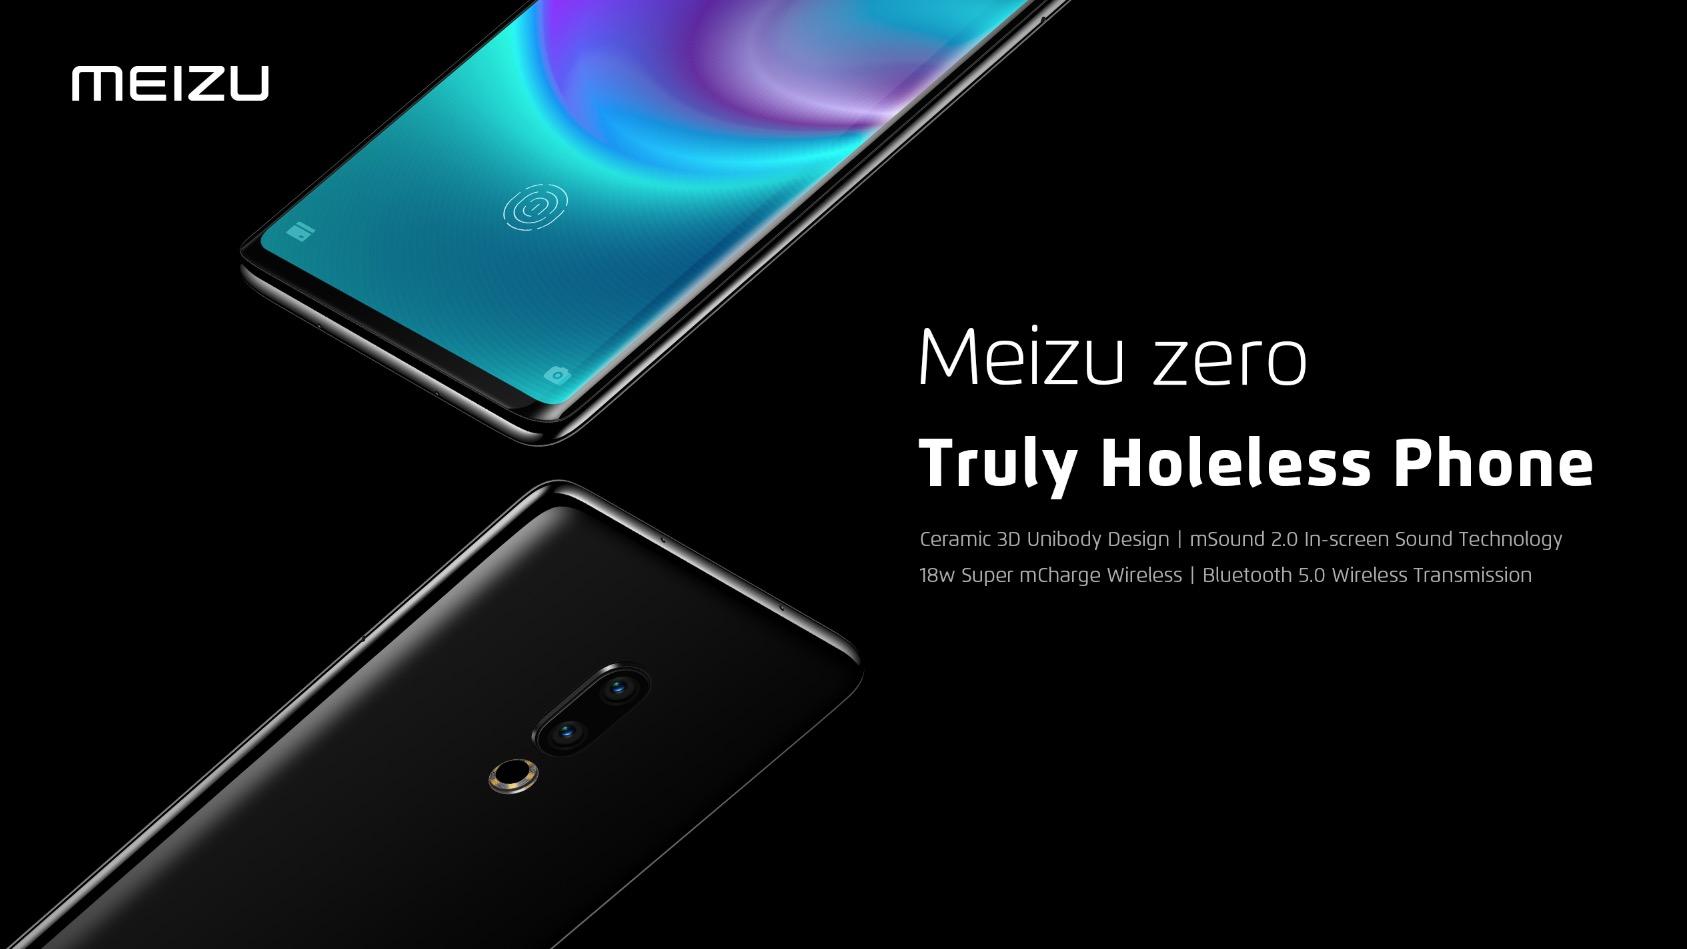 Meizu announces the Meizu zero, the world’s first holeless phone. Pushing the boundaries of future flagship smartphones.